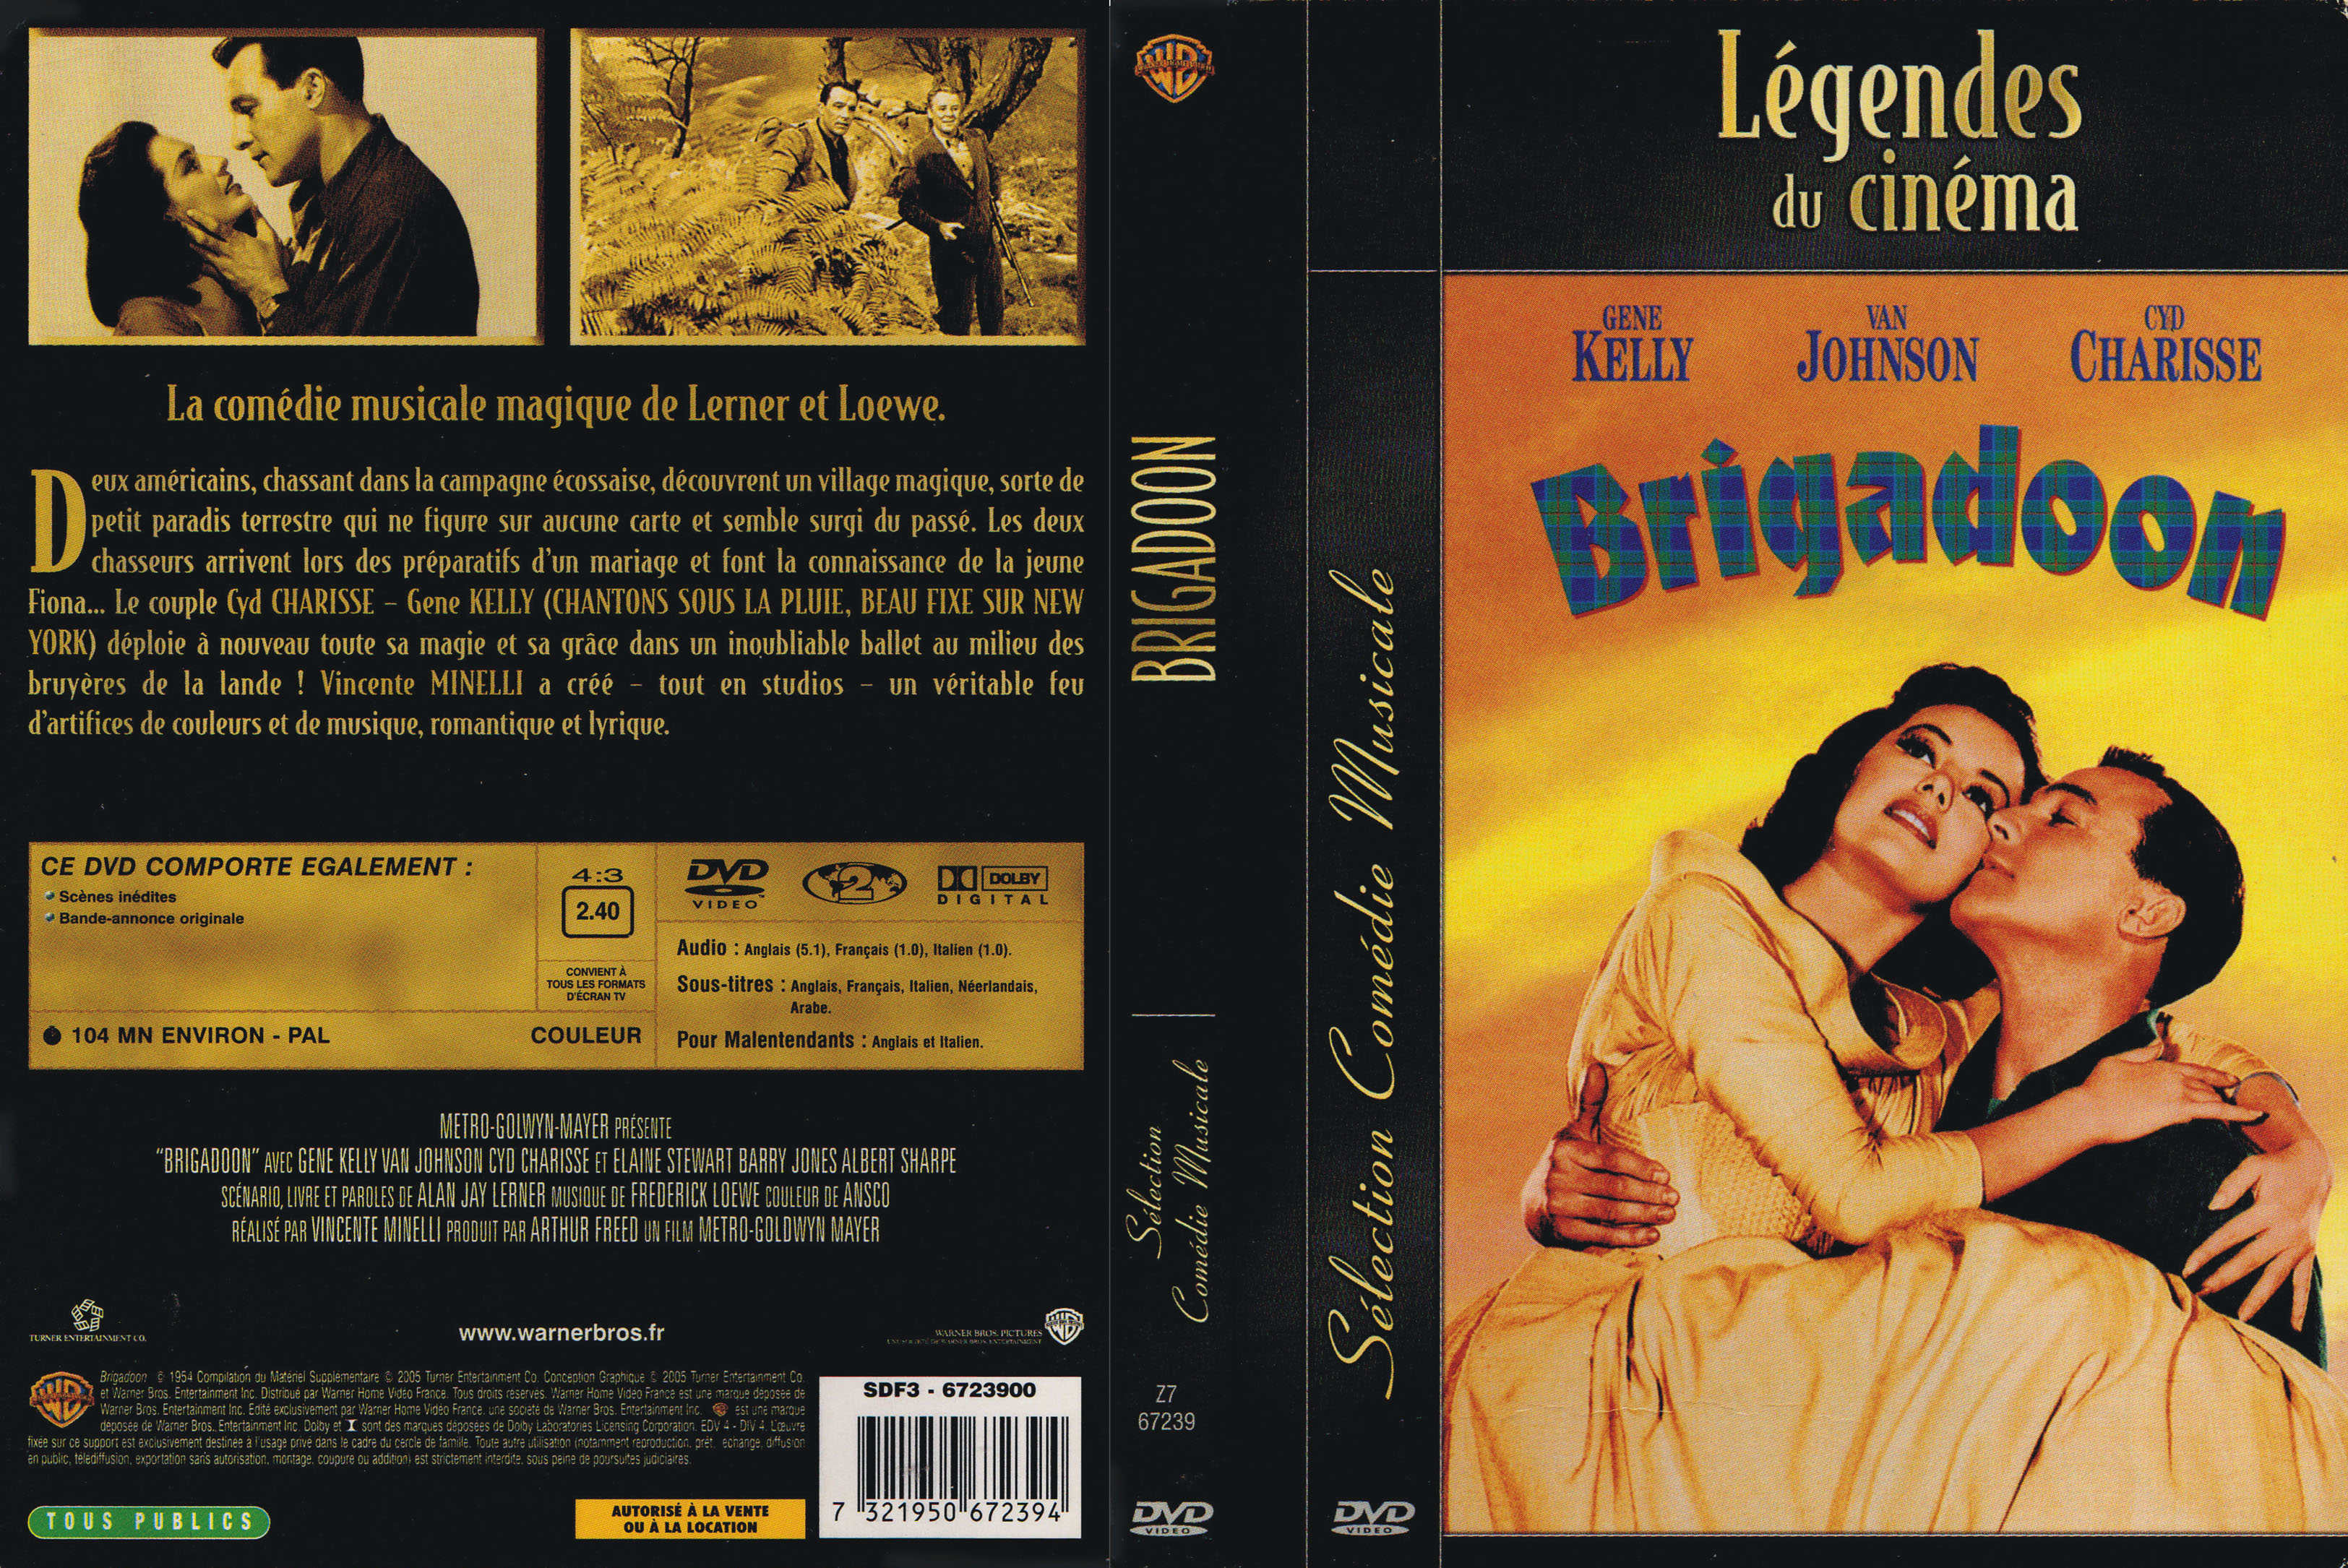 Jaquette DVD Brigadoon v2